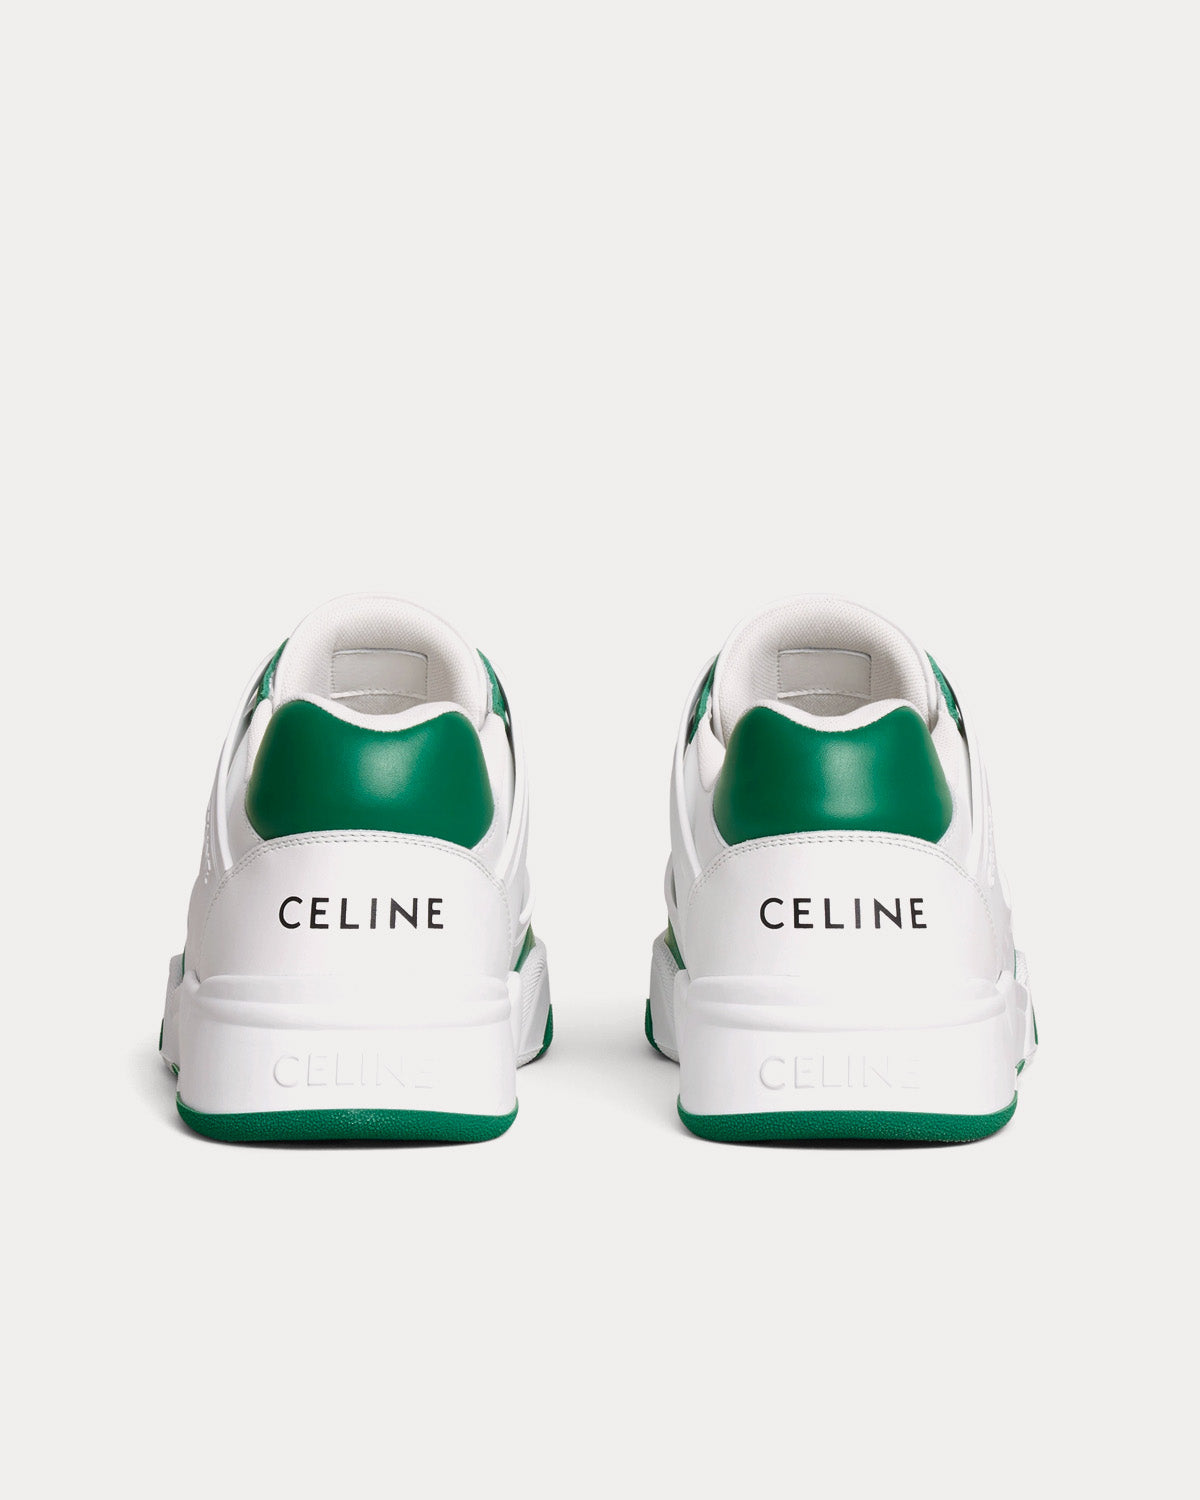 Celine - CT-07 Calfskin Leather Optic White / Dark Green Low Top Sneakers